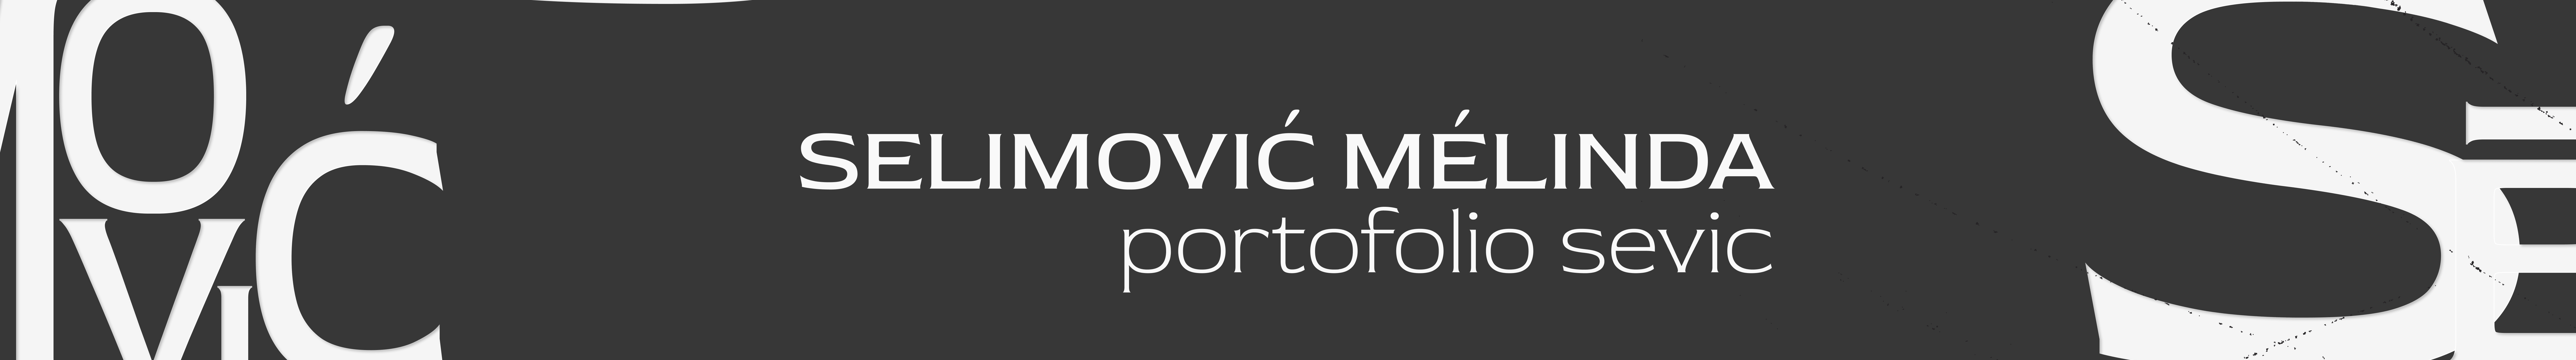 Mélinda Selimovic's profile banner